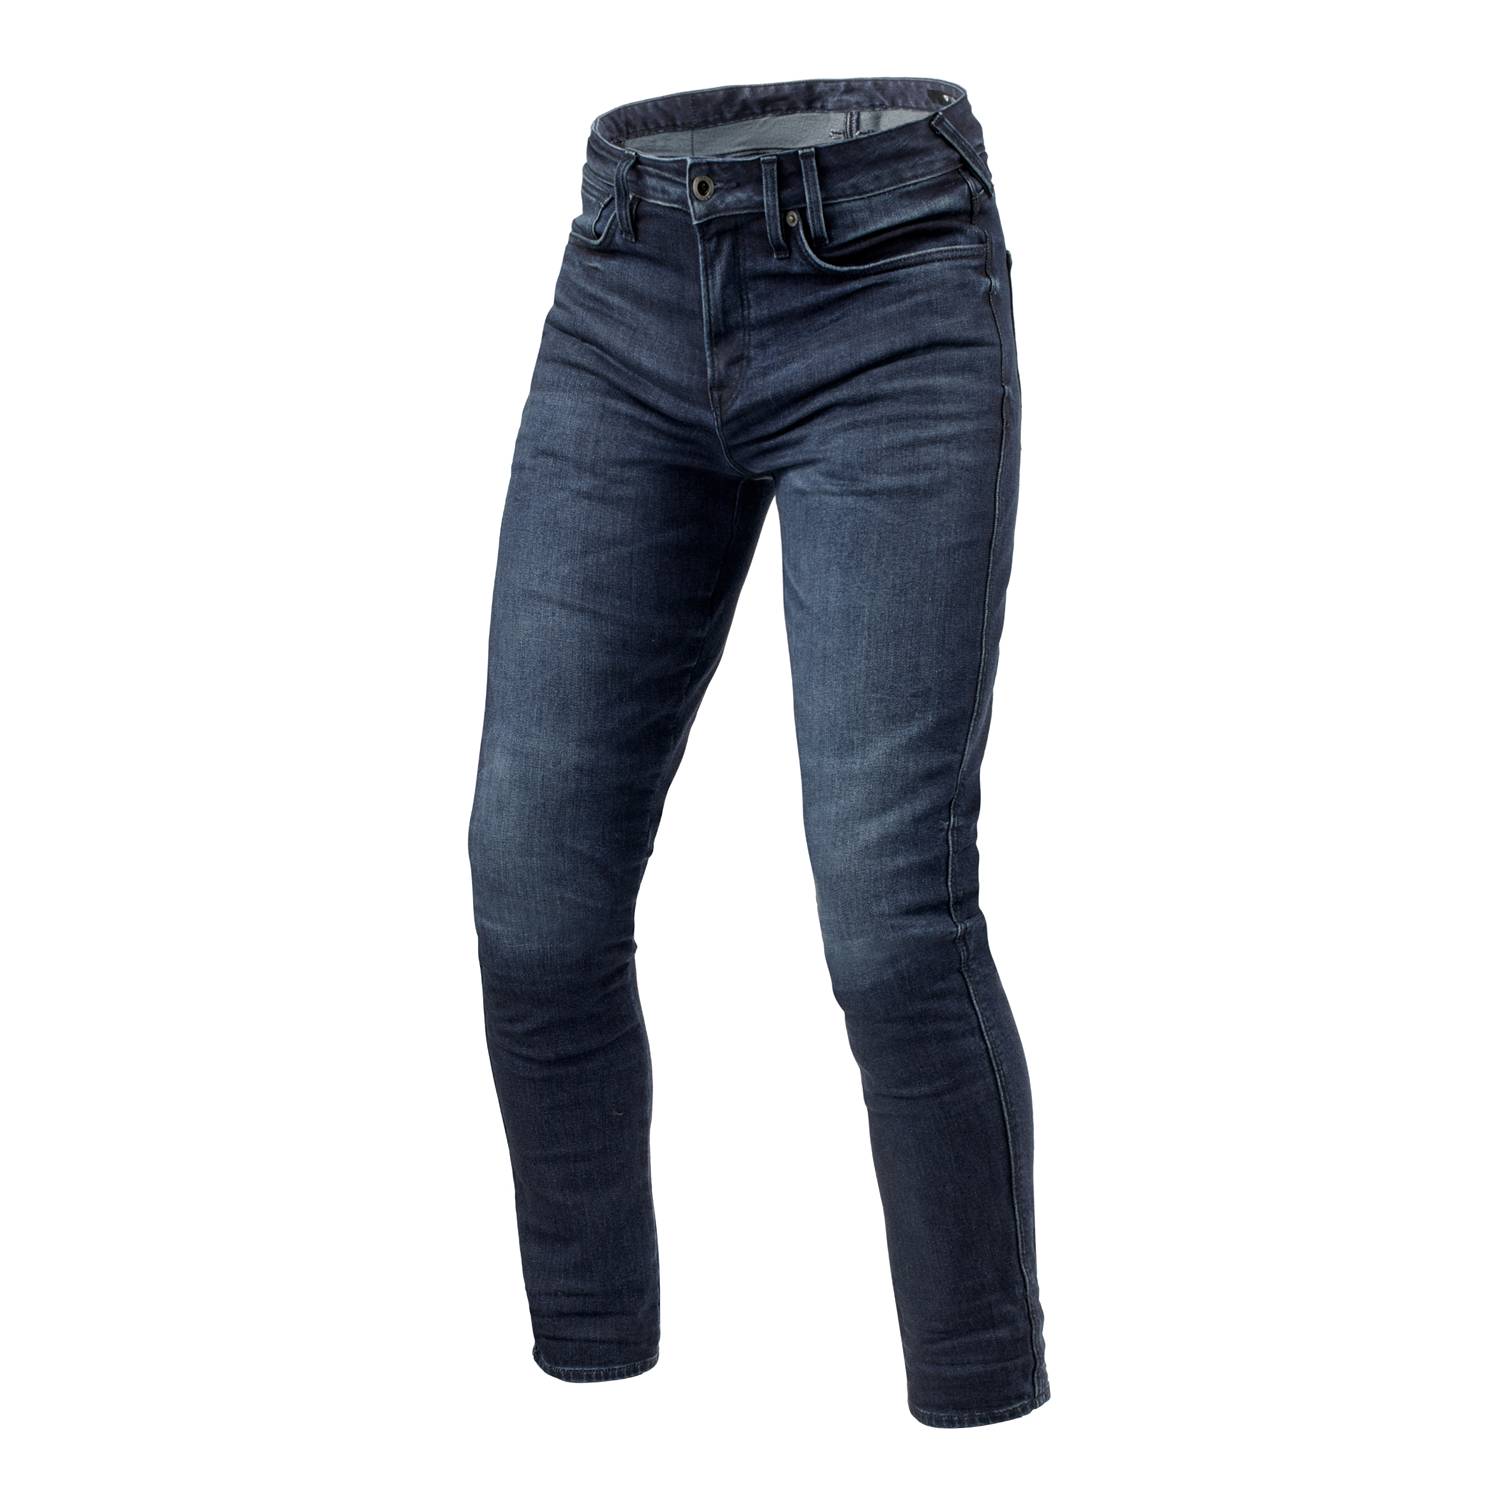 Image of REV'IT! Jeans Carlin SK Dark Blue Used L32 Motorcycle Jeans Größe L32/W33